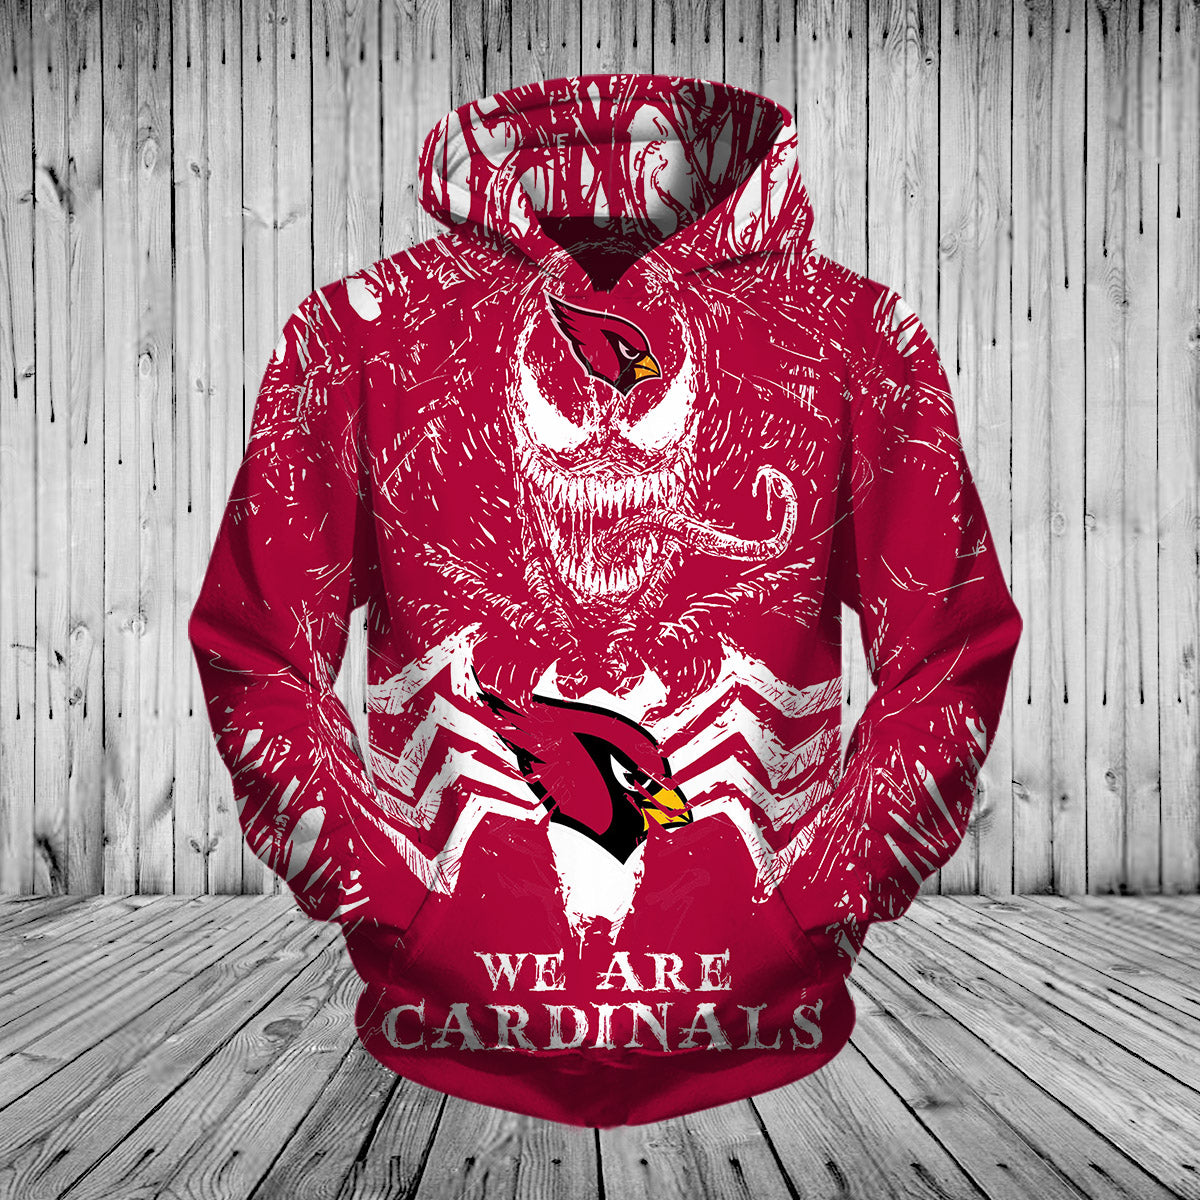 arizona cardinals pullover hoodie